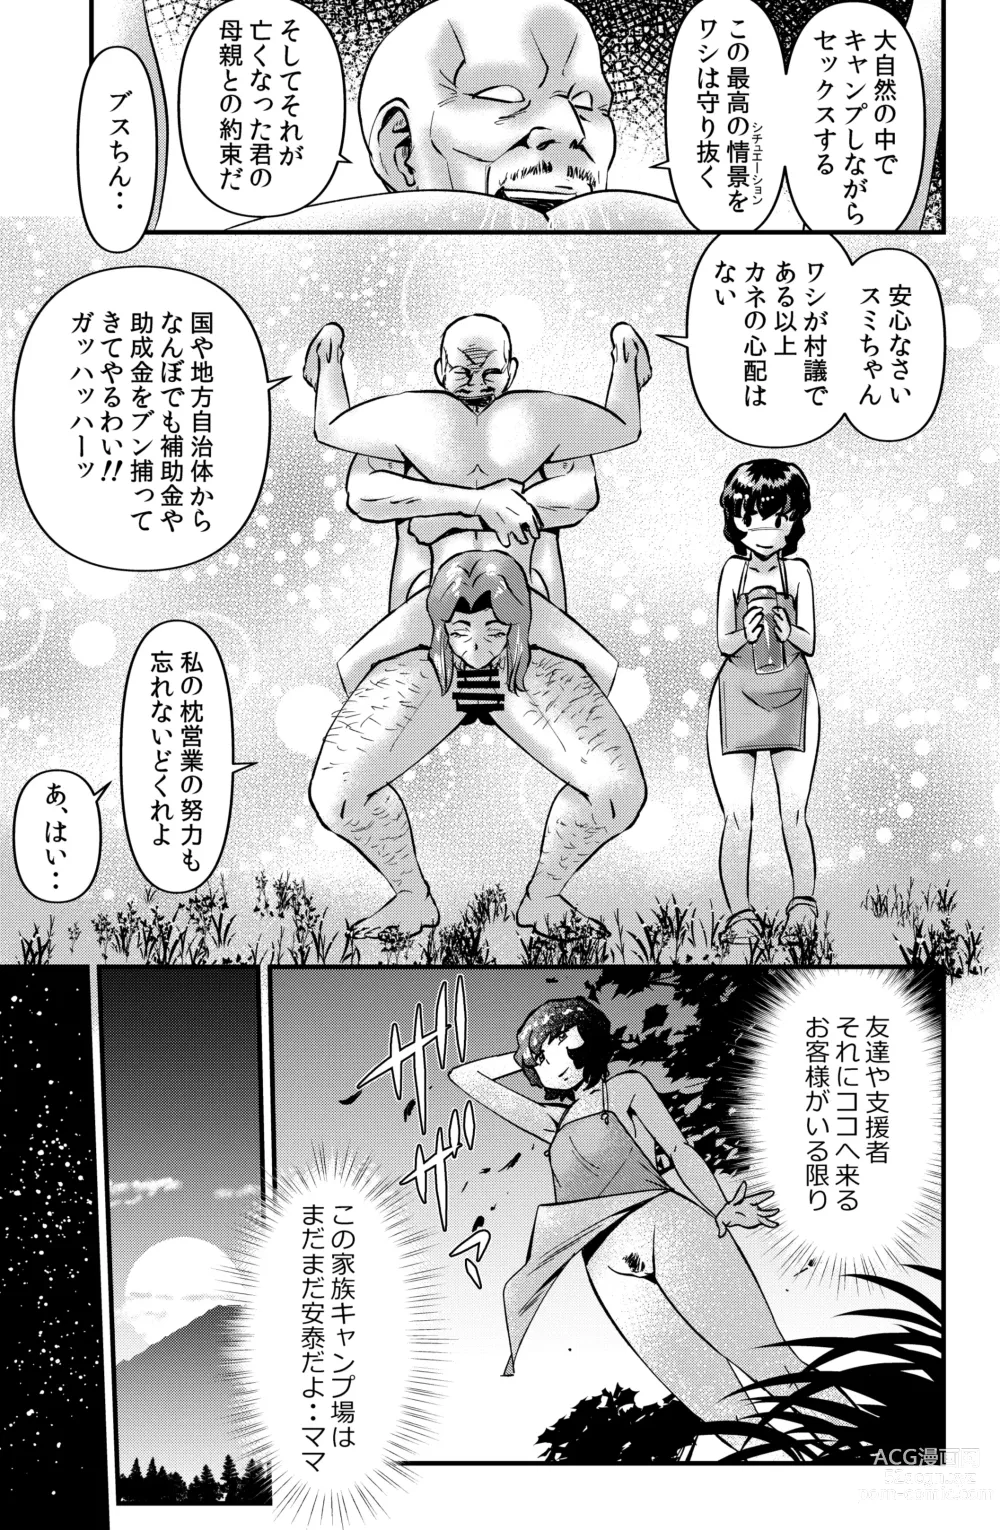 Page 25 of doujinshi Kazoku Camp 2